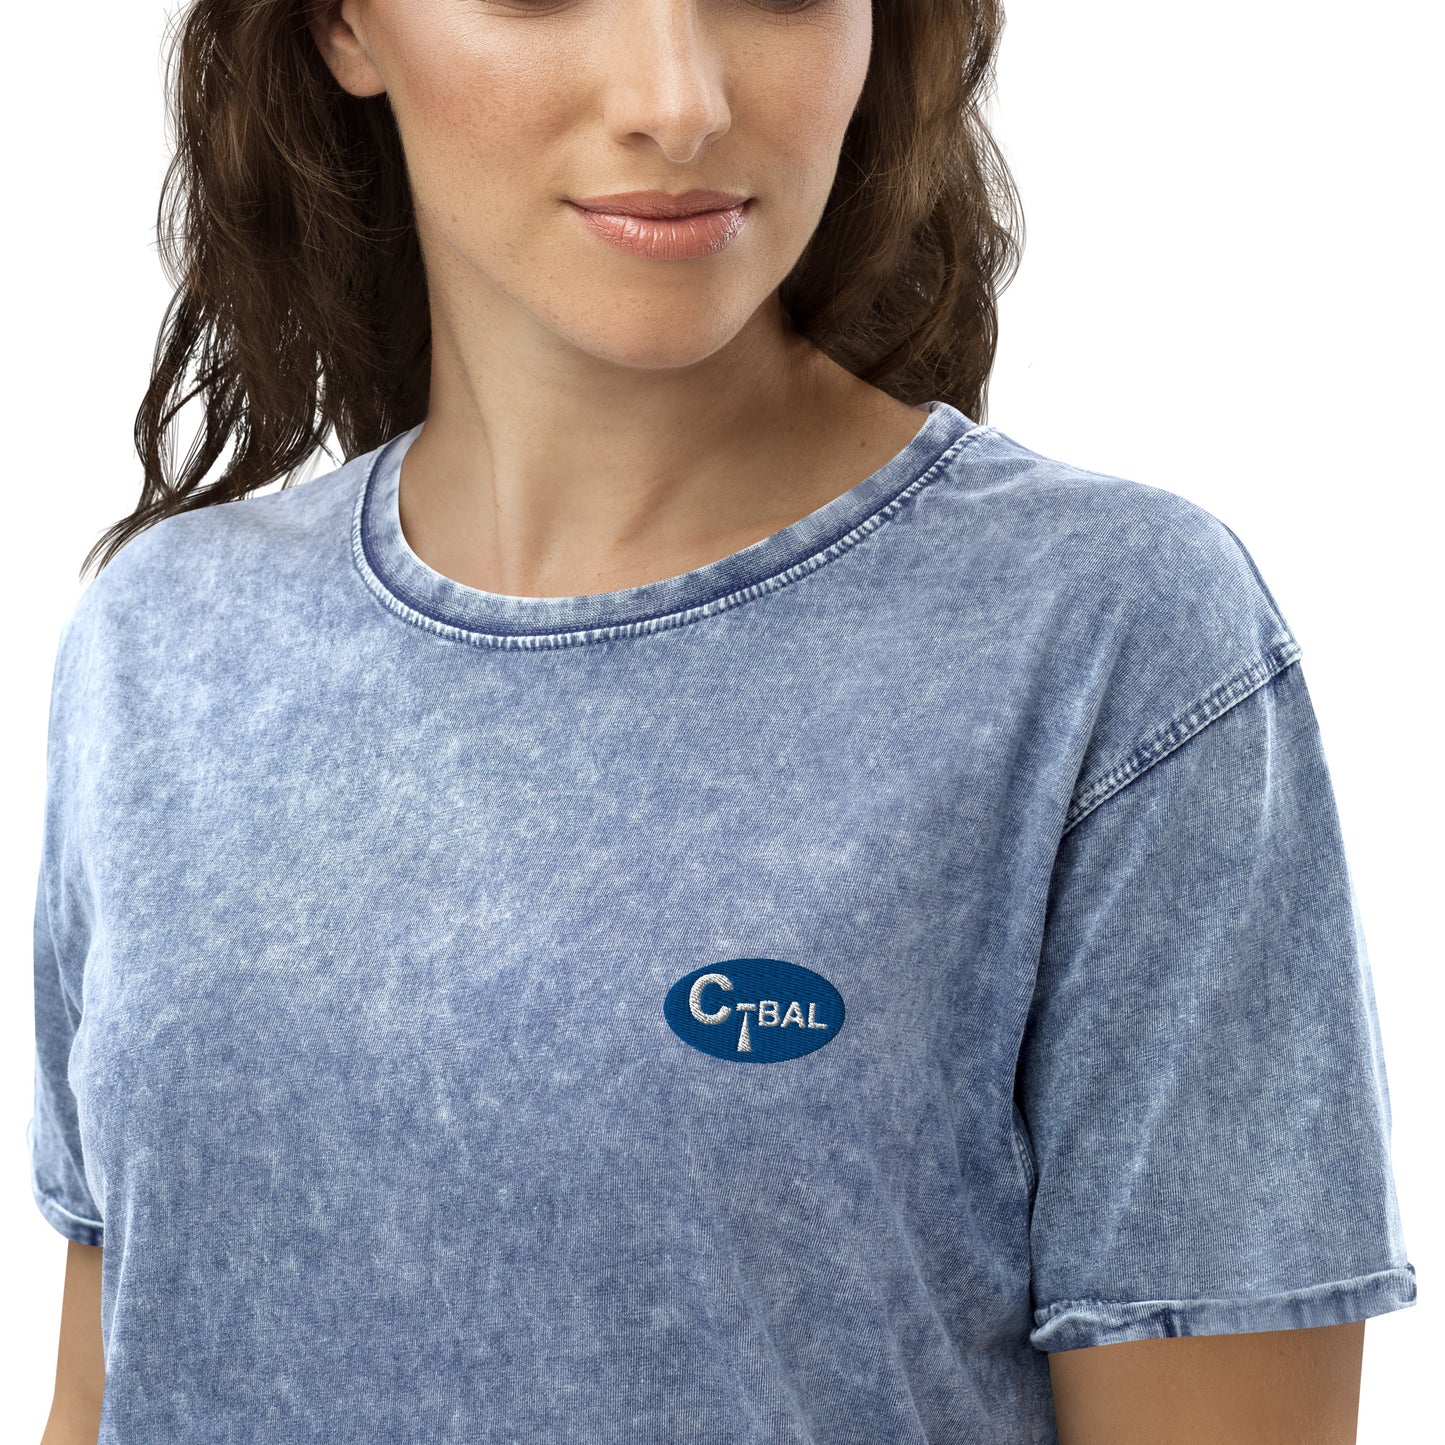 B001 - Denim T-shirt (C-BAL : Blue / Embroidery Logo)